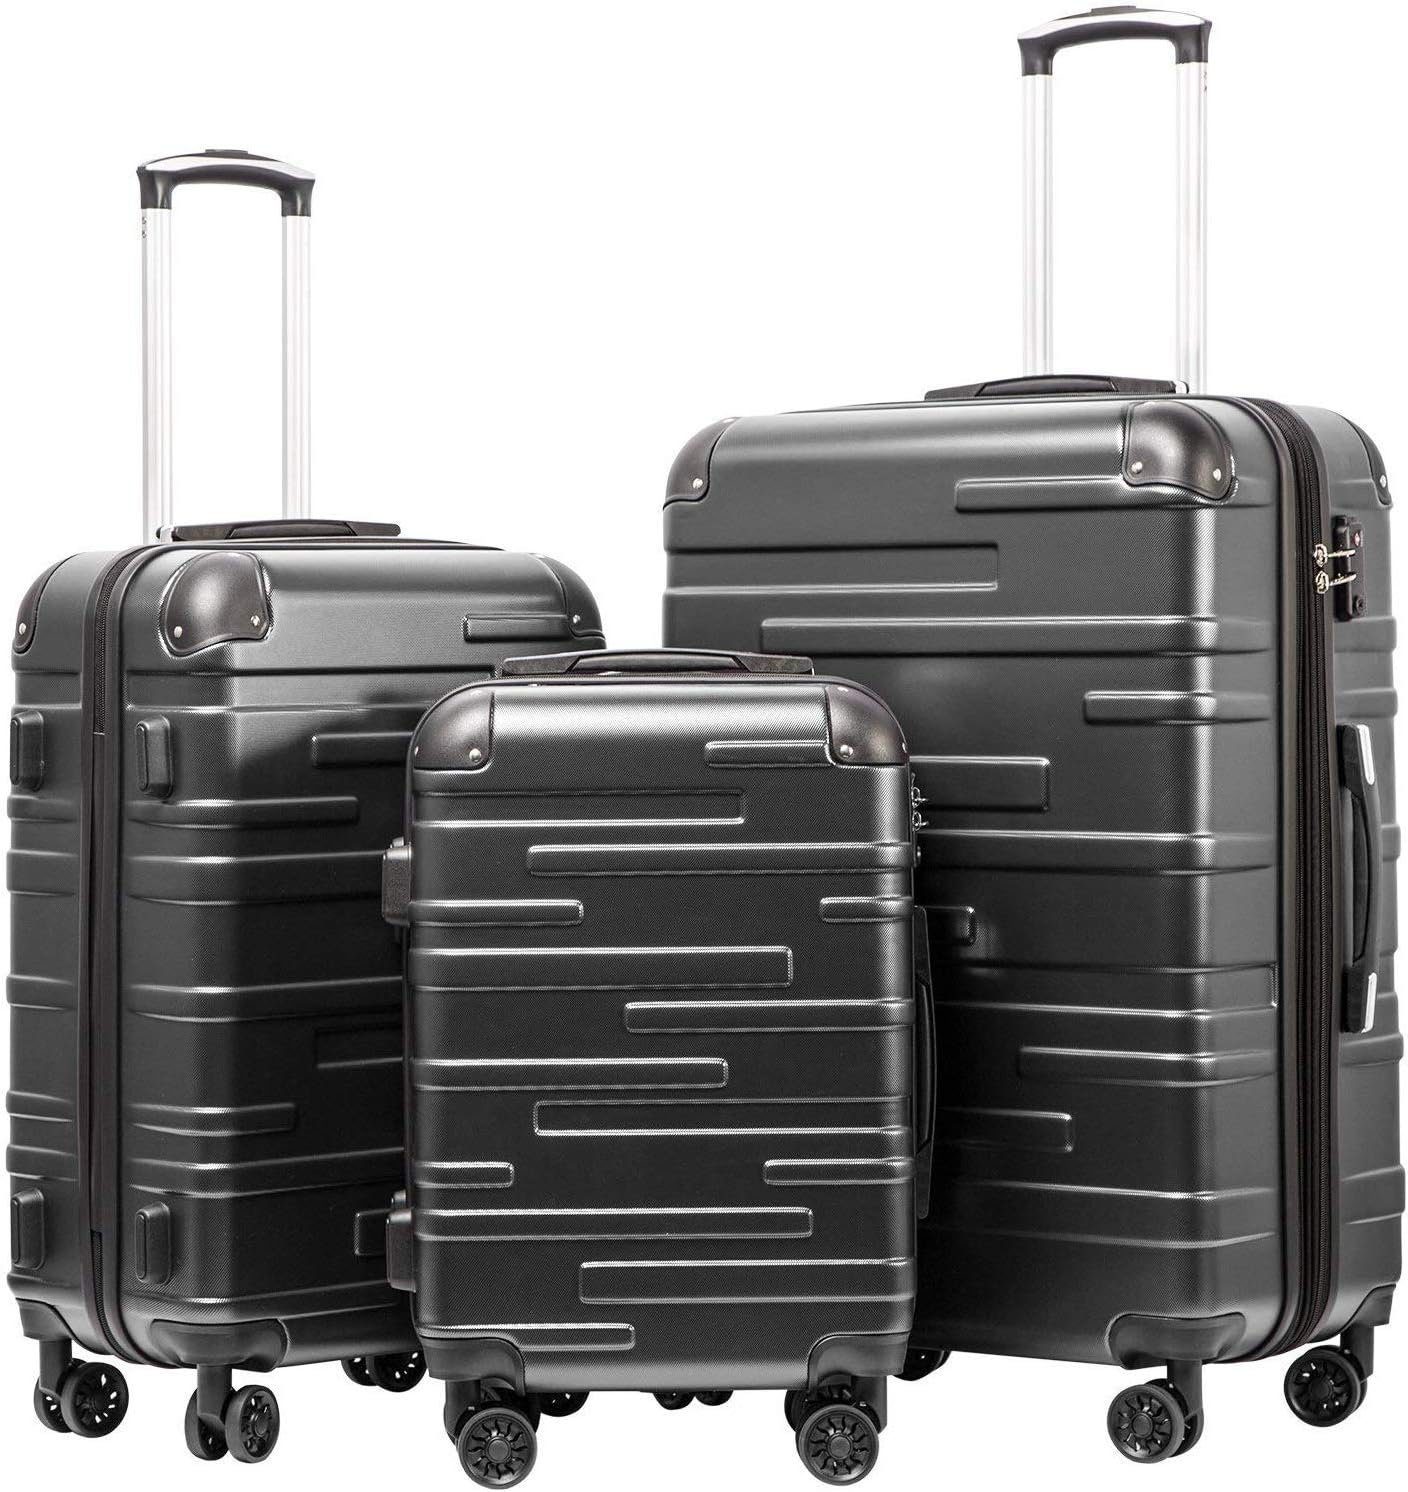 Coolife Kofferset ABS Material mit TSA-Schloss, 4 Rollen, Interieur mit Reißverschlusstasche und elastischem FullCapacity Design